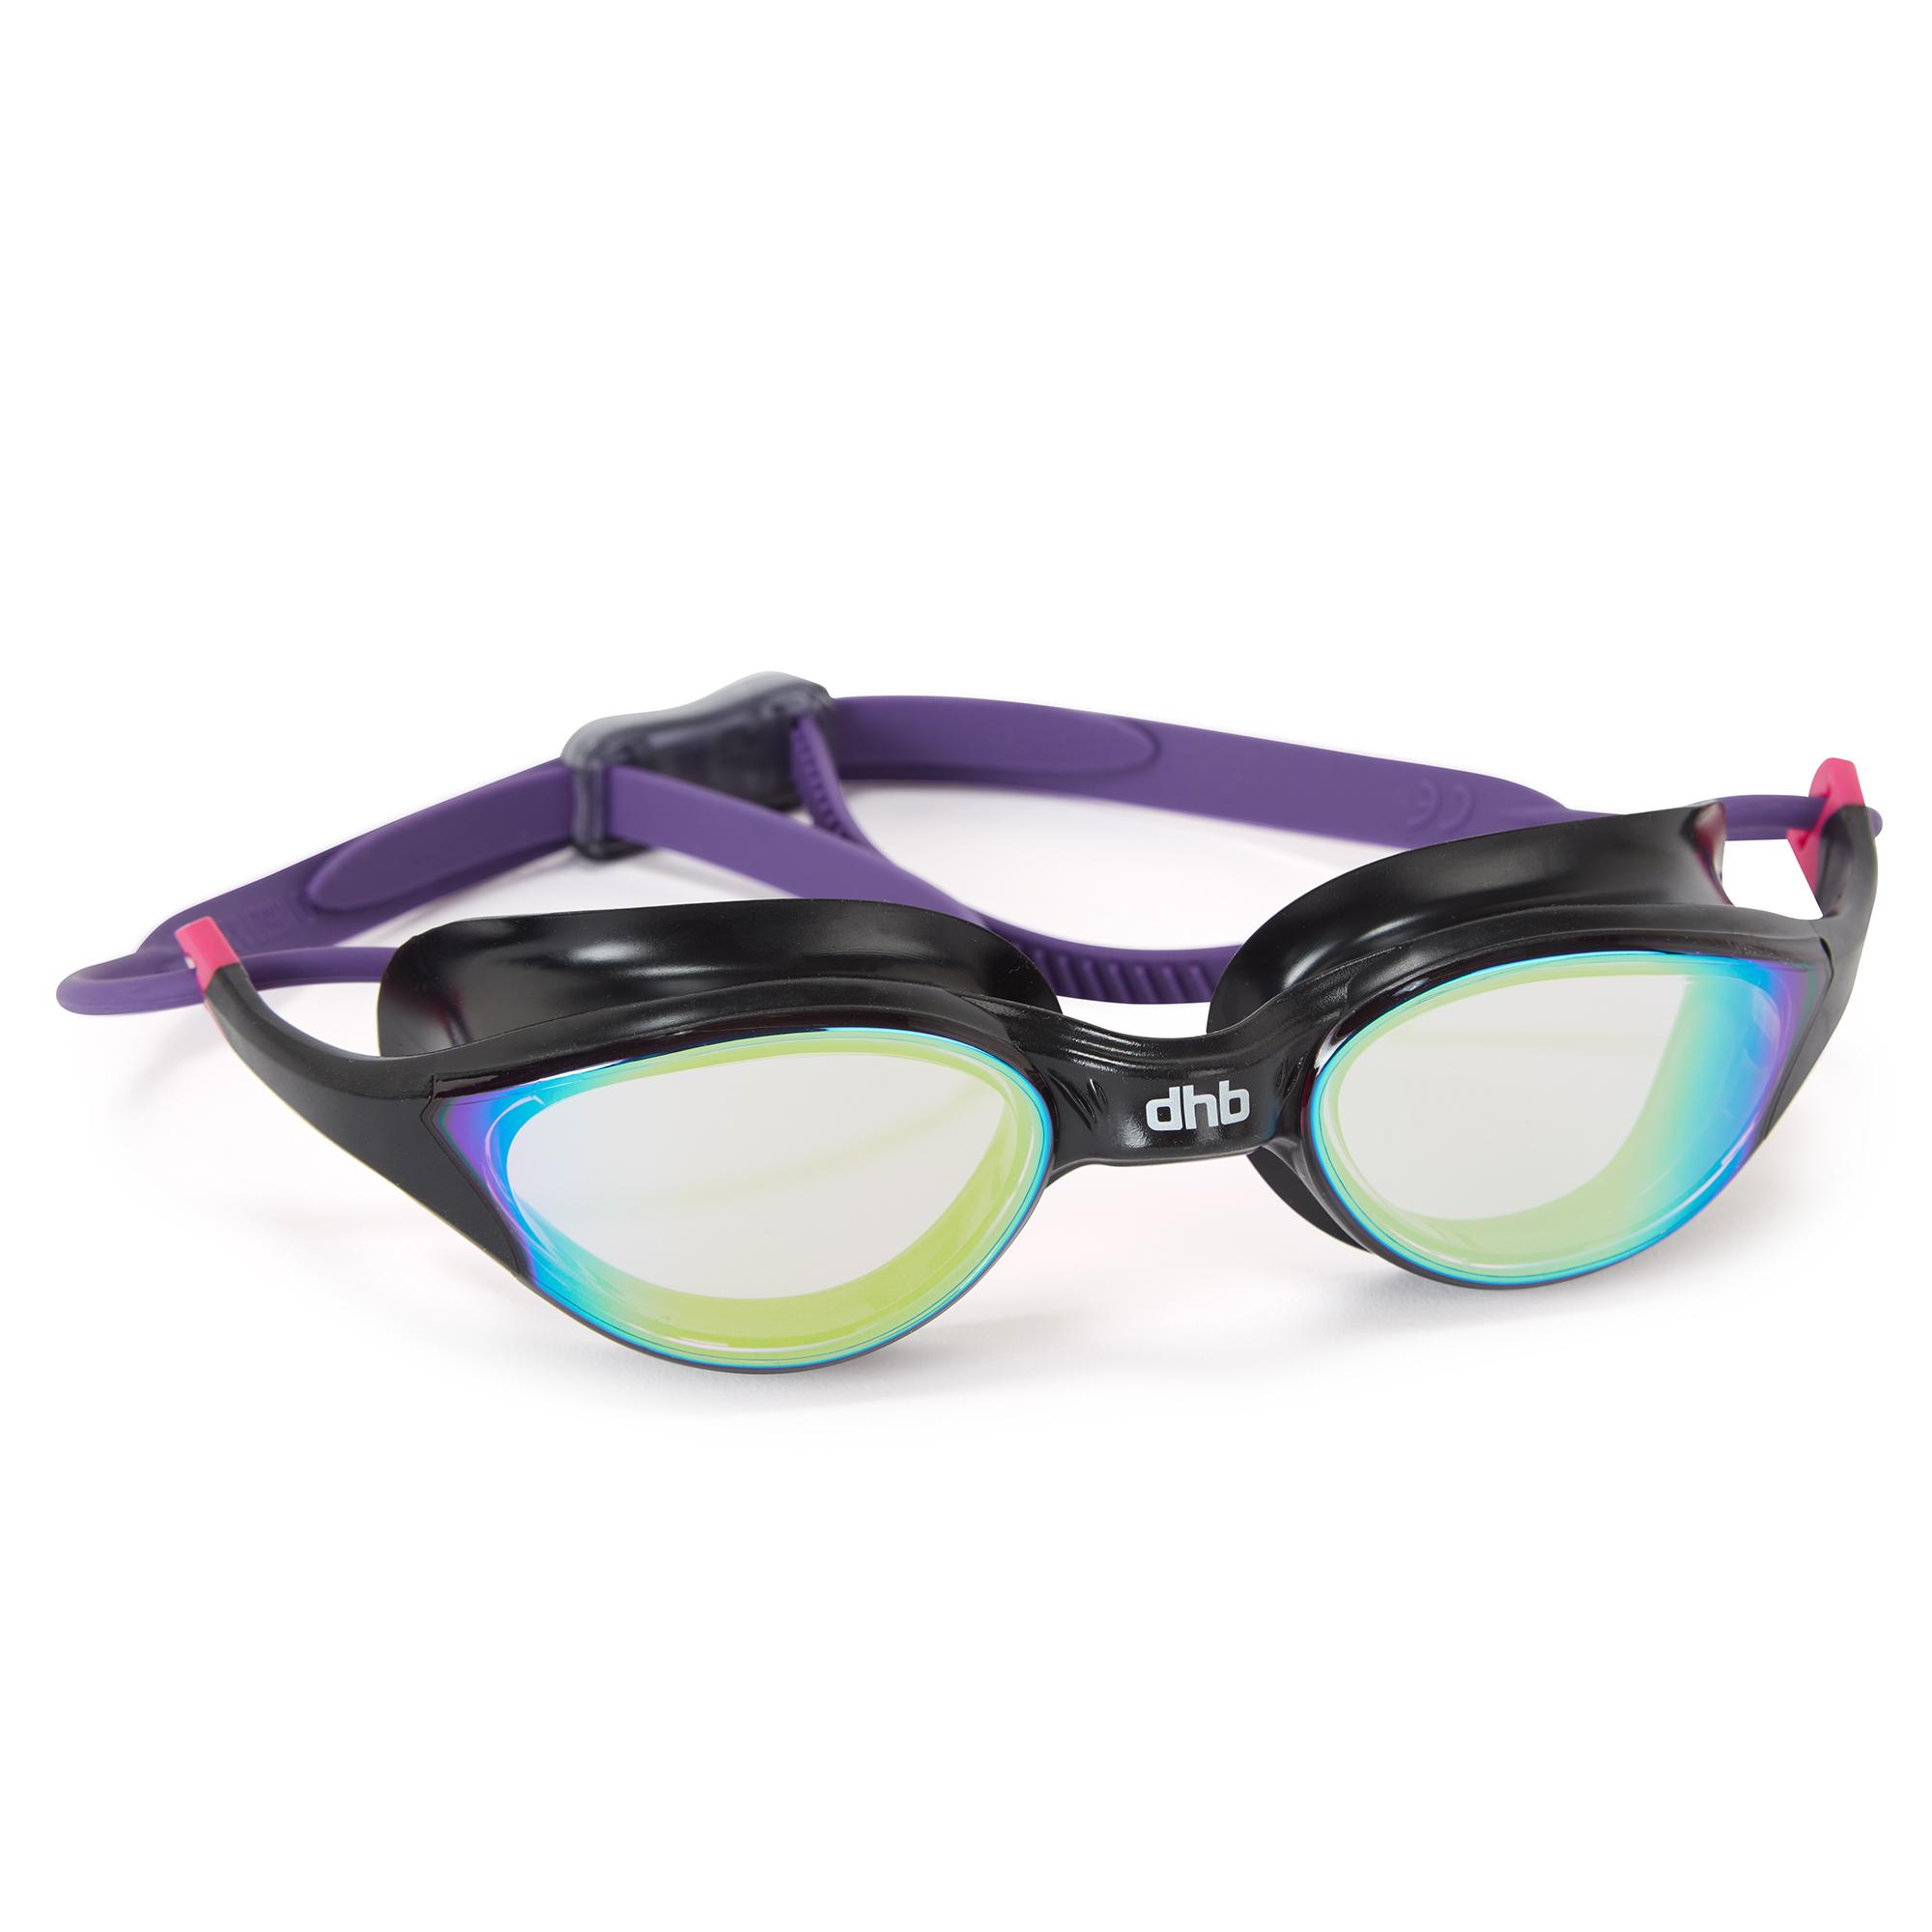 Dhb Aeron Uv Swim Goggles - Mirror Lens - Black/purple